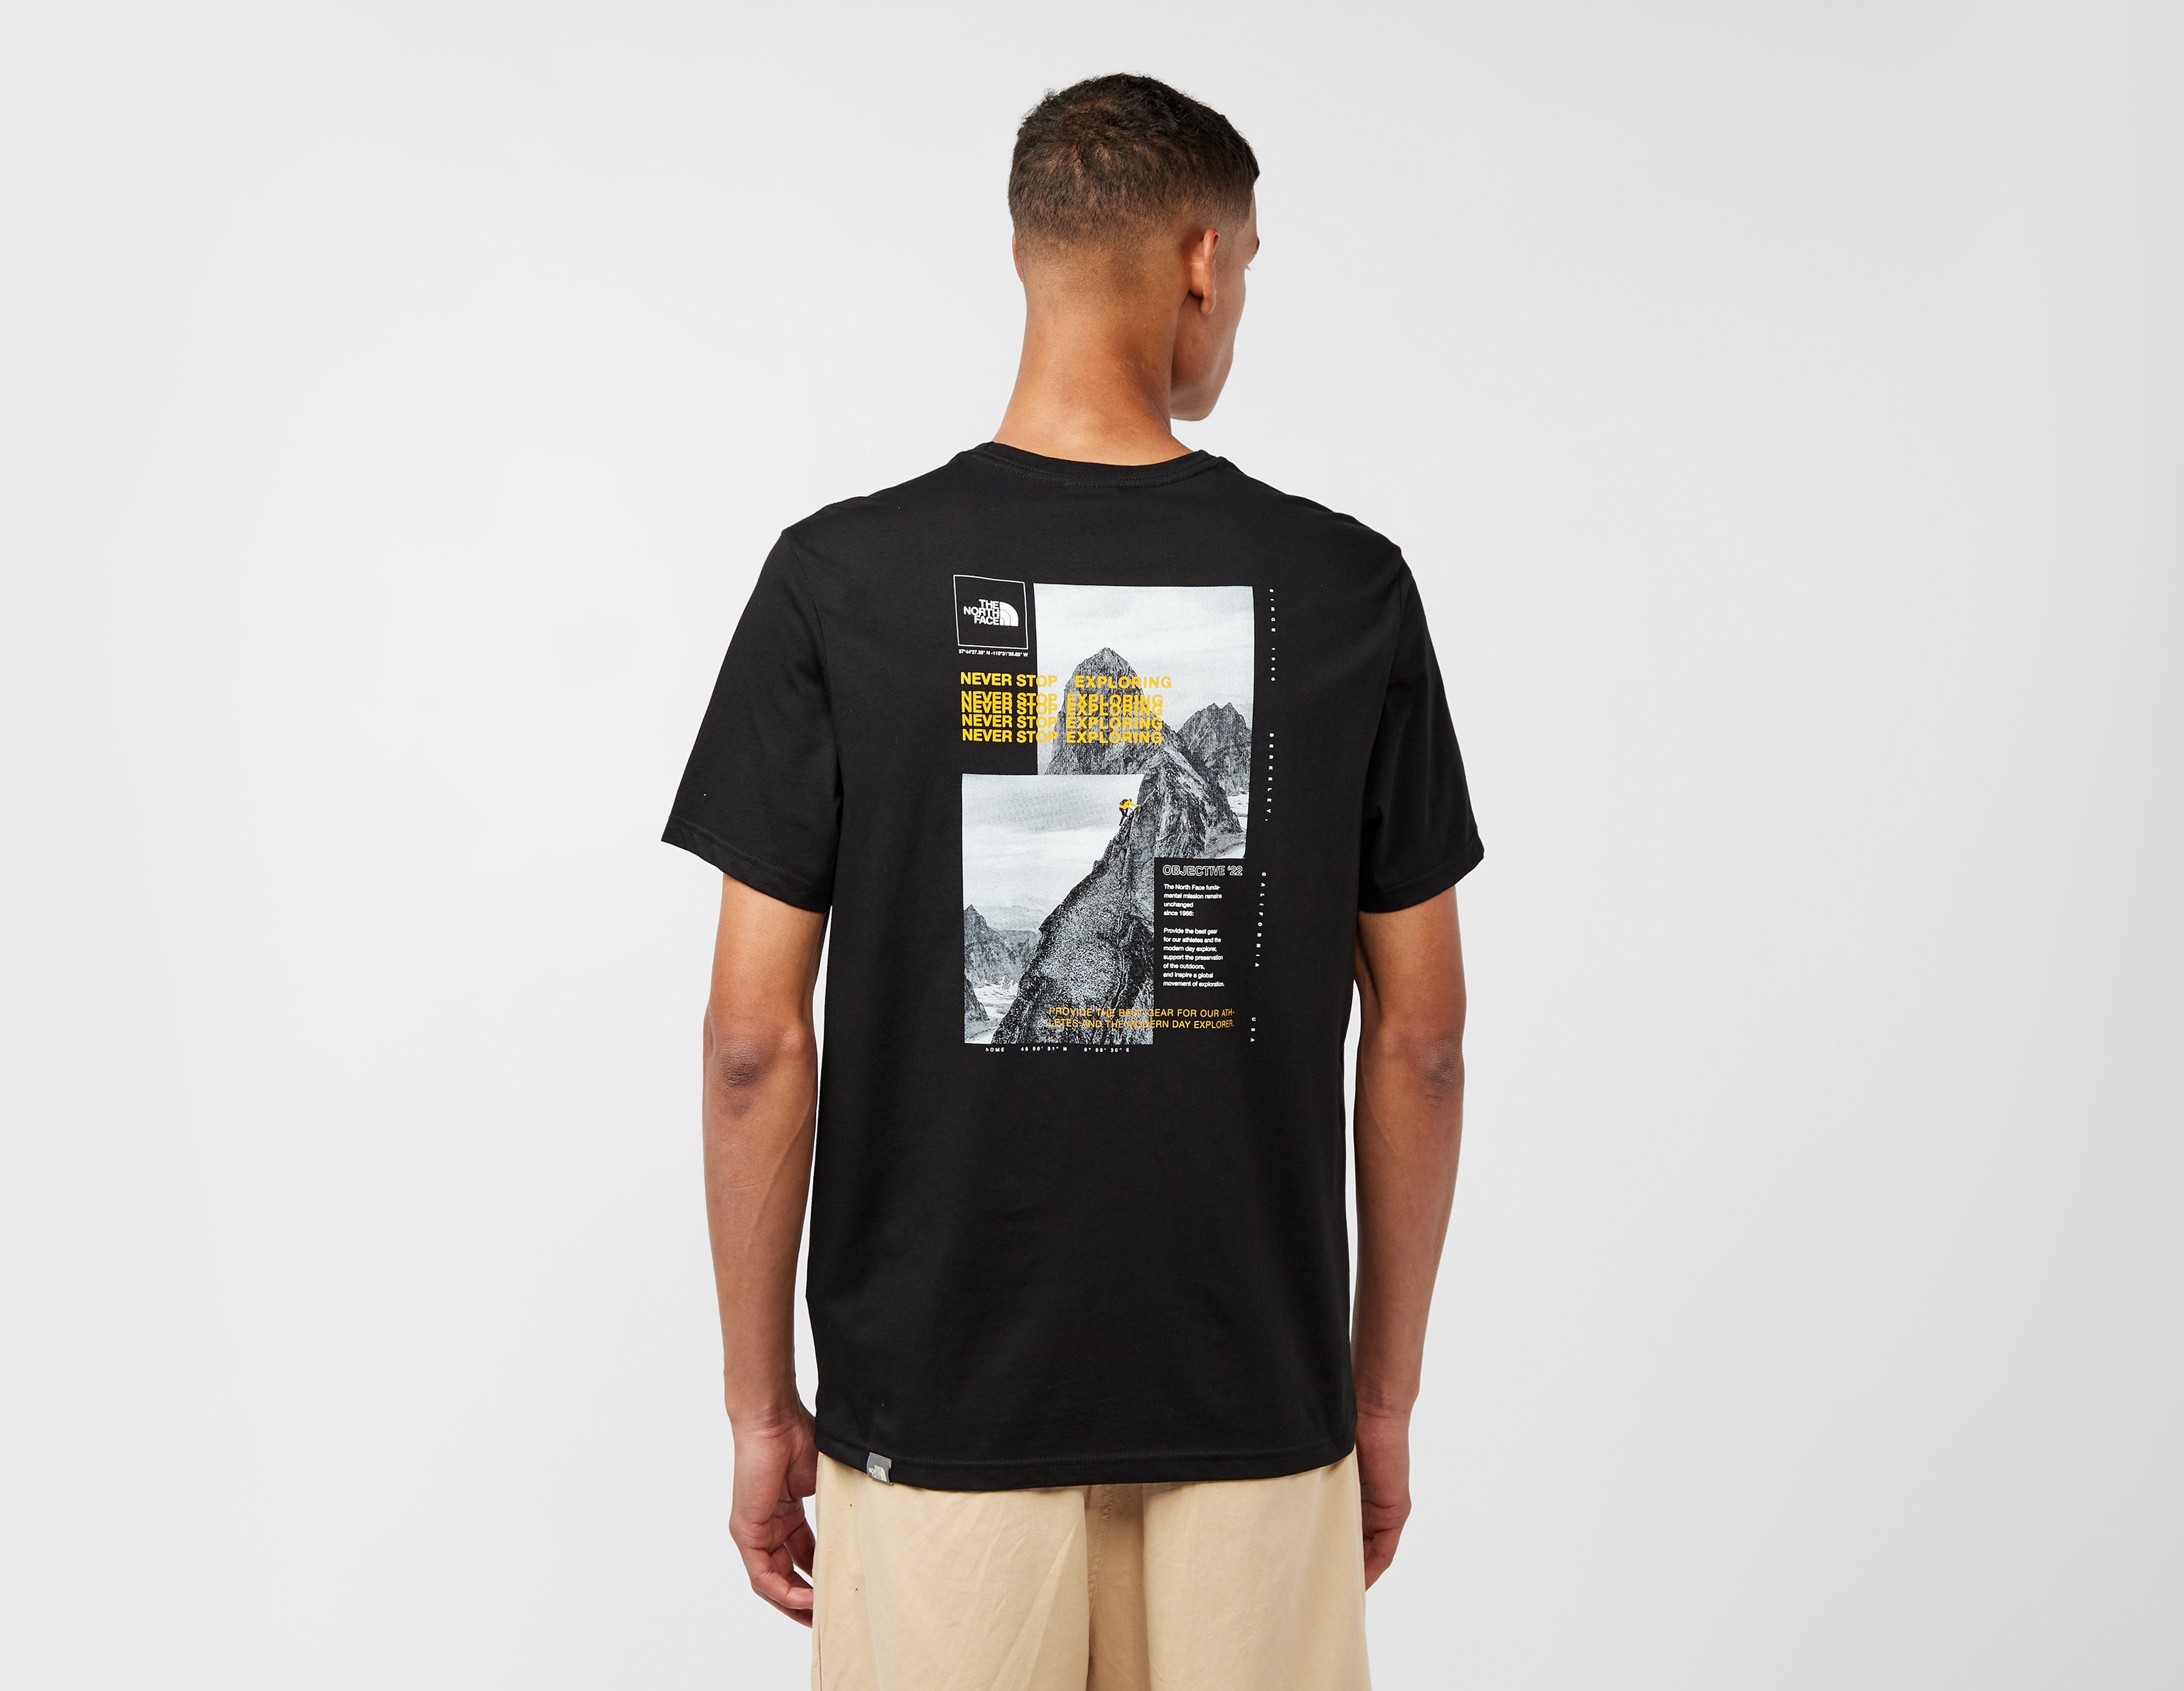 Shirt | T-shirt Puma Evostripe branco - Black The North Face Collage T -  Healthdesign?